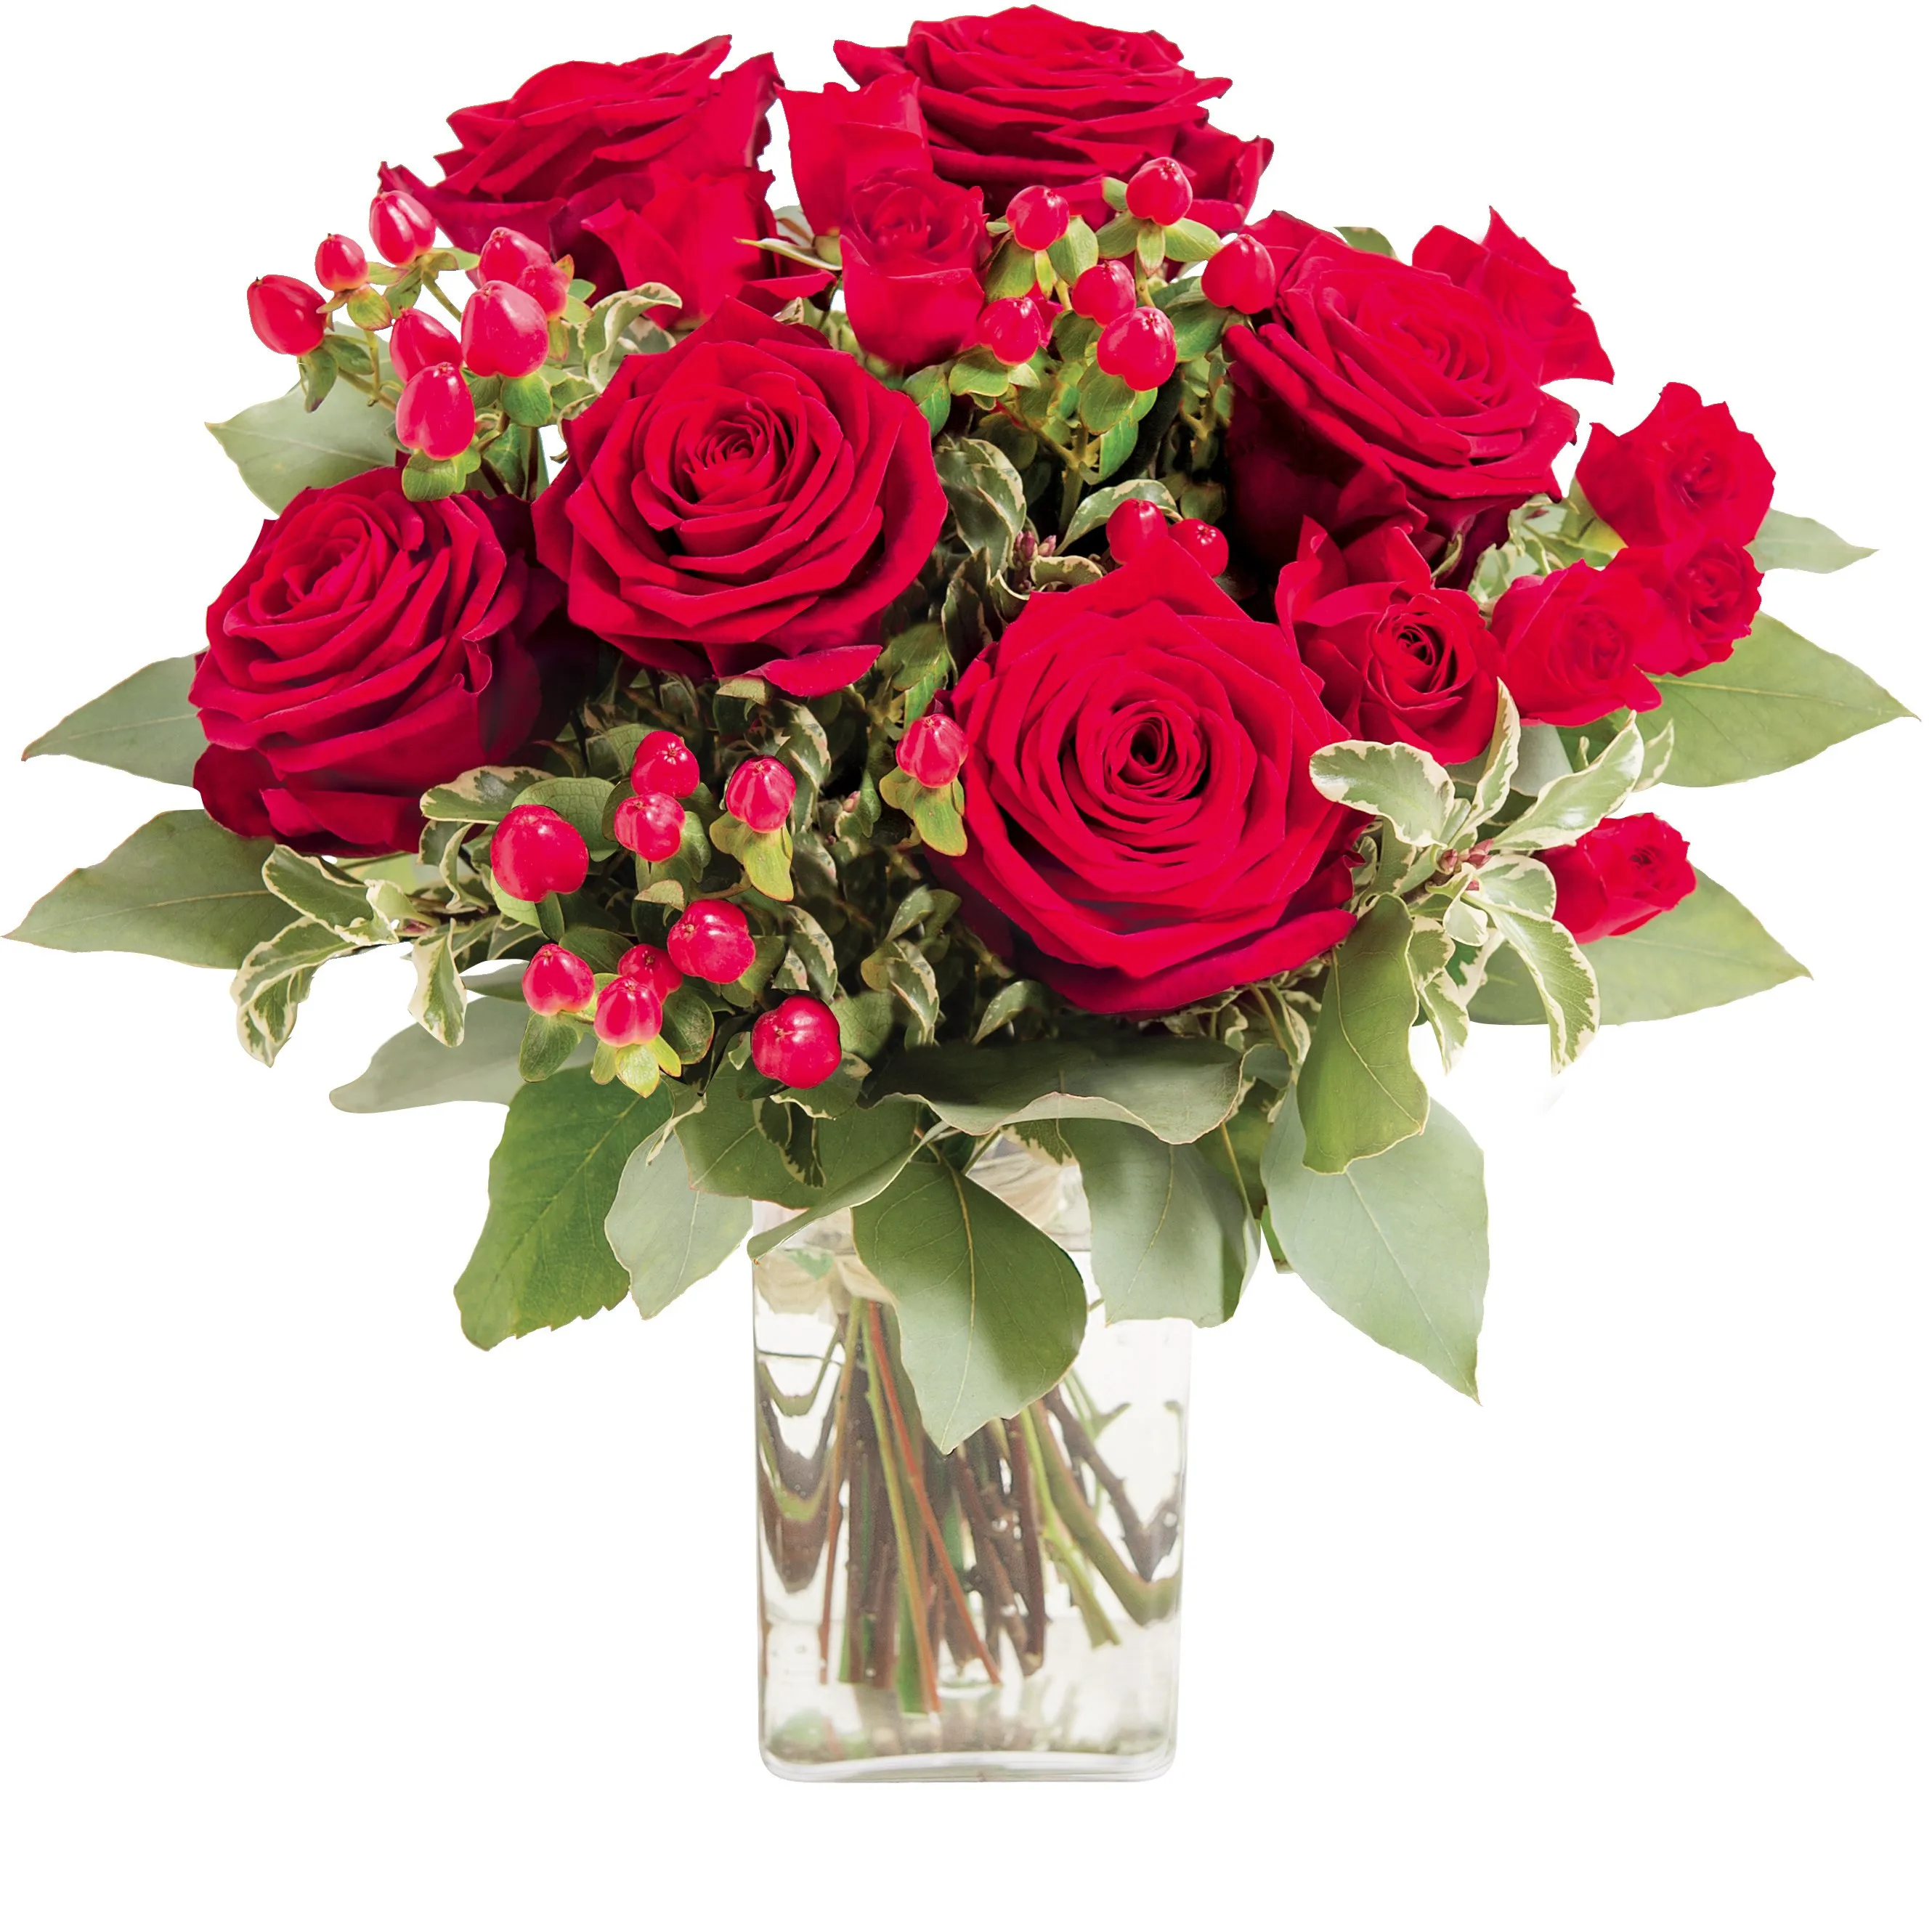 Bouquet of red roses "Evita" - Kazachstan